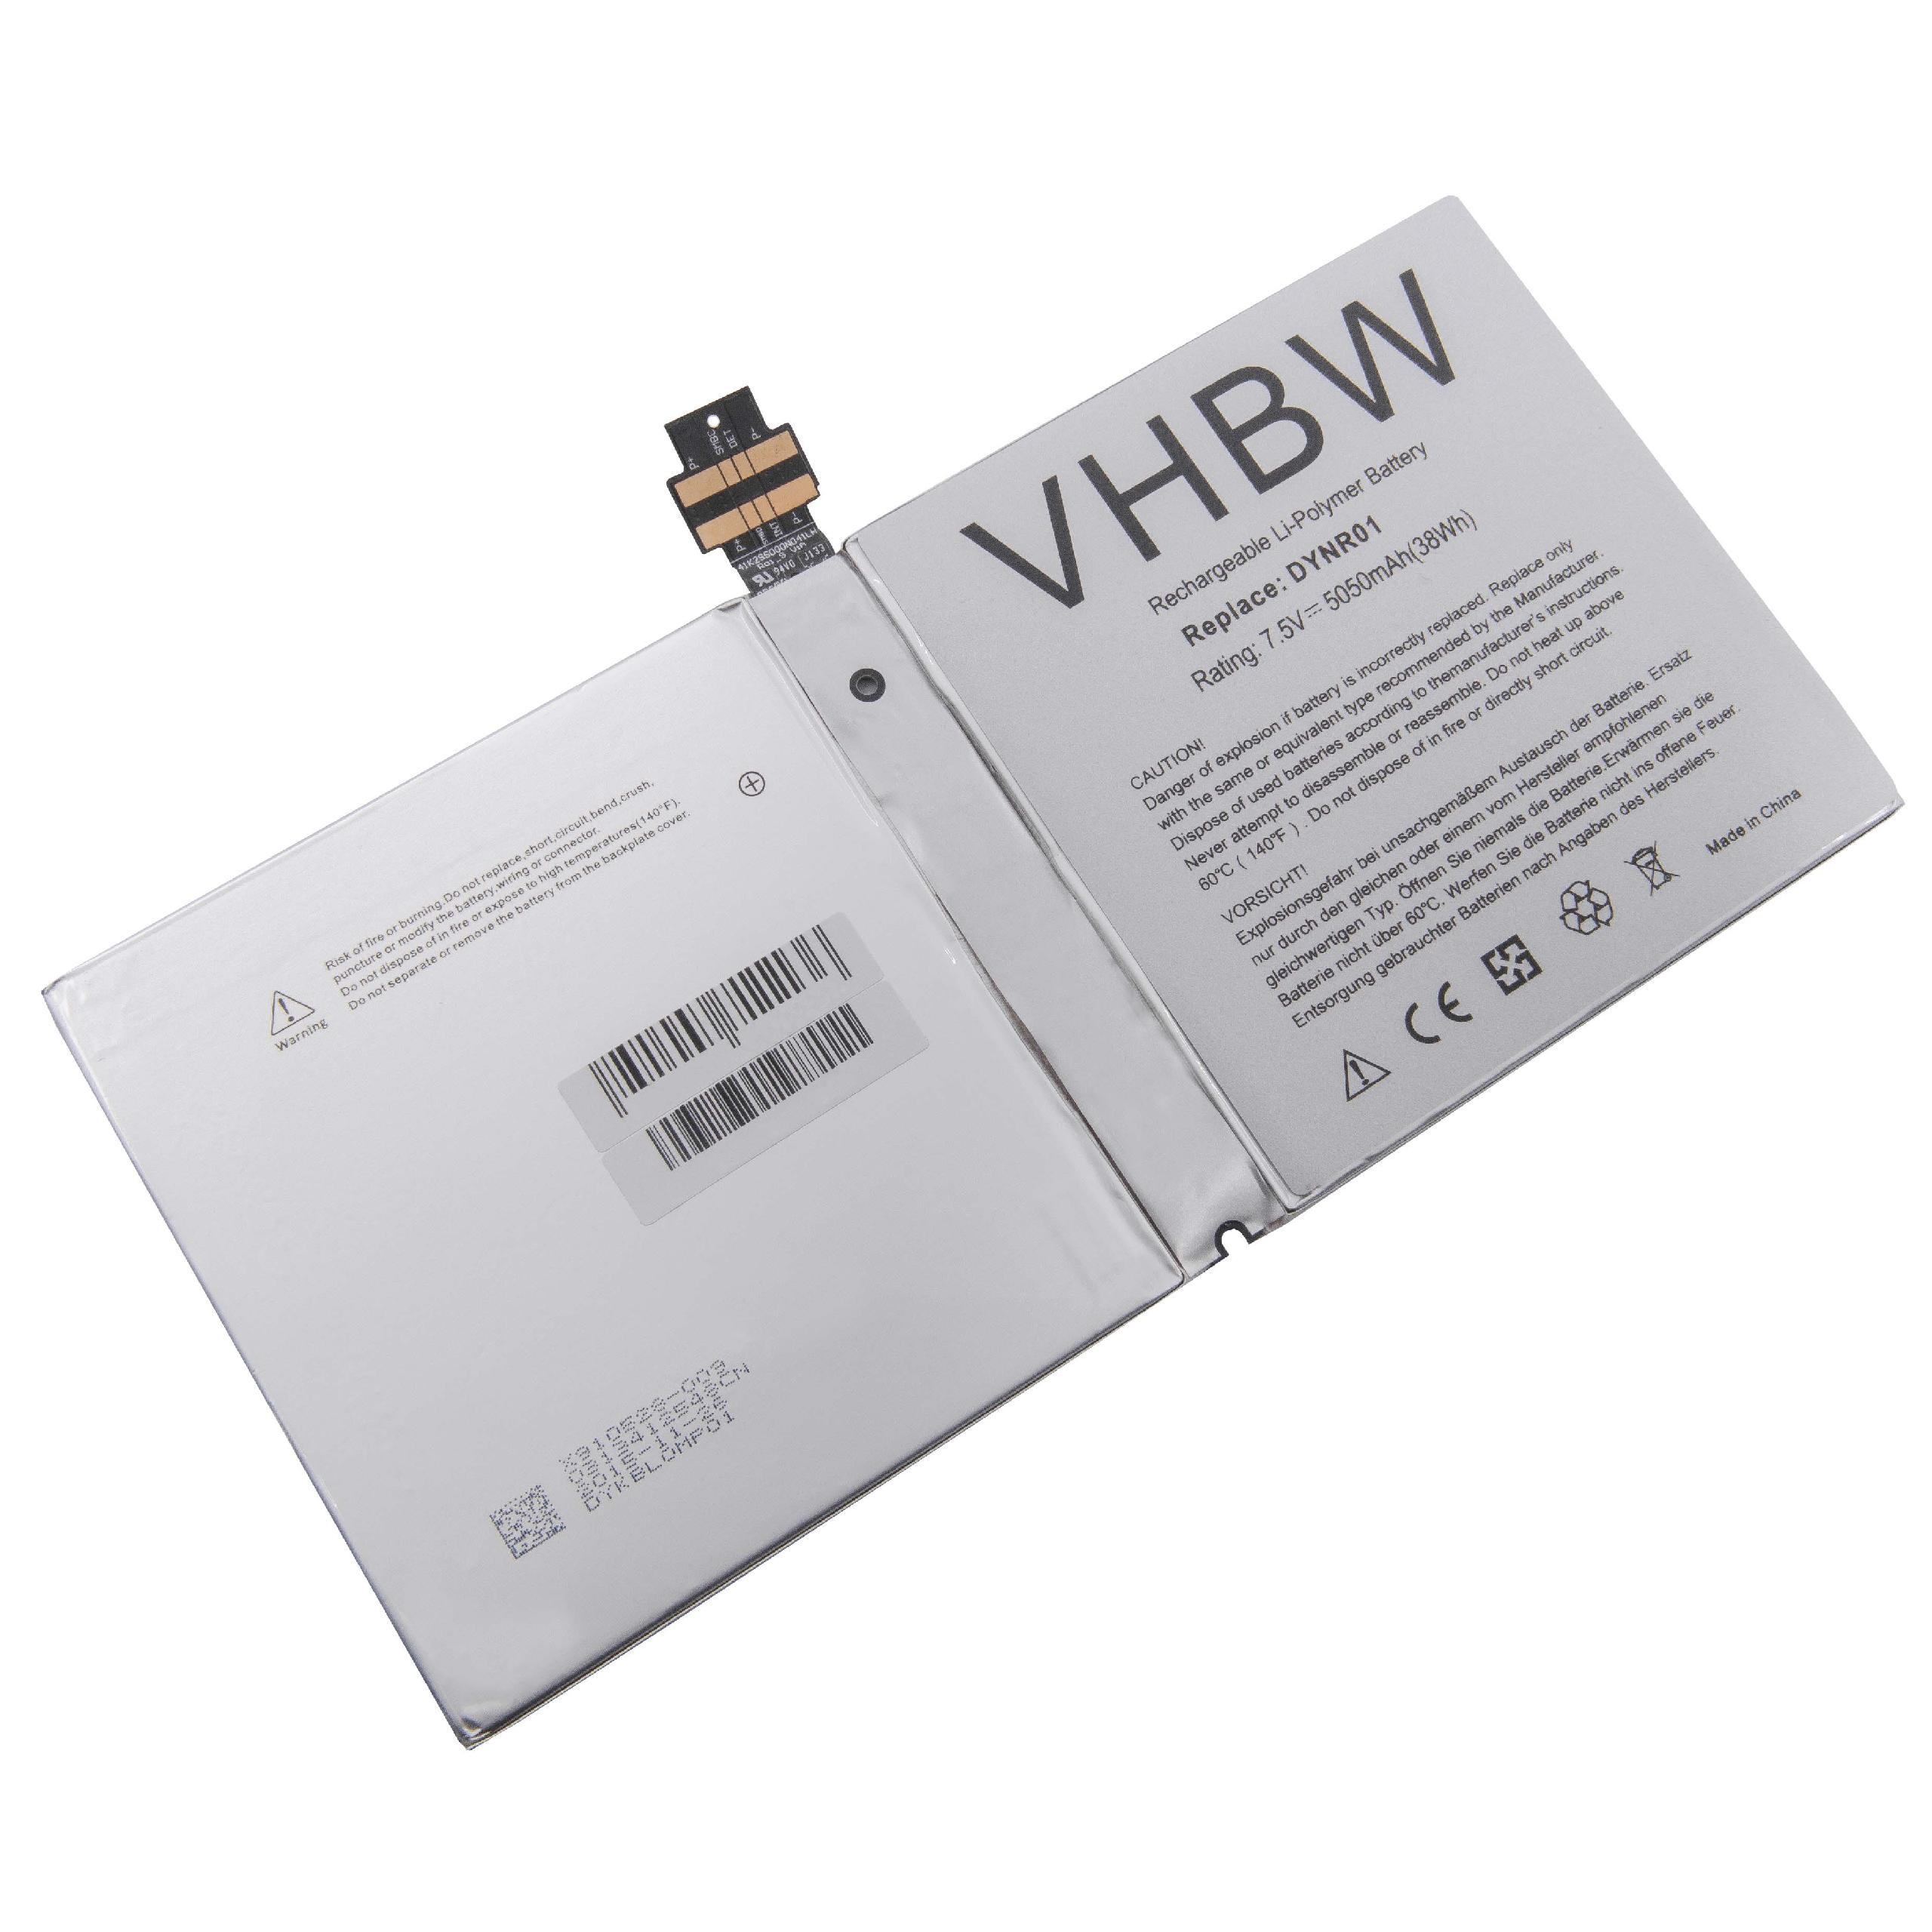 VHBW Pro Akku - Microsoft 7.5 4, Surface 5050 Volt, kompatibel Li-Polymer mit Tablet, 4 1724,